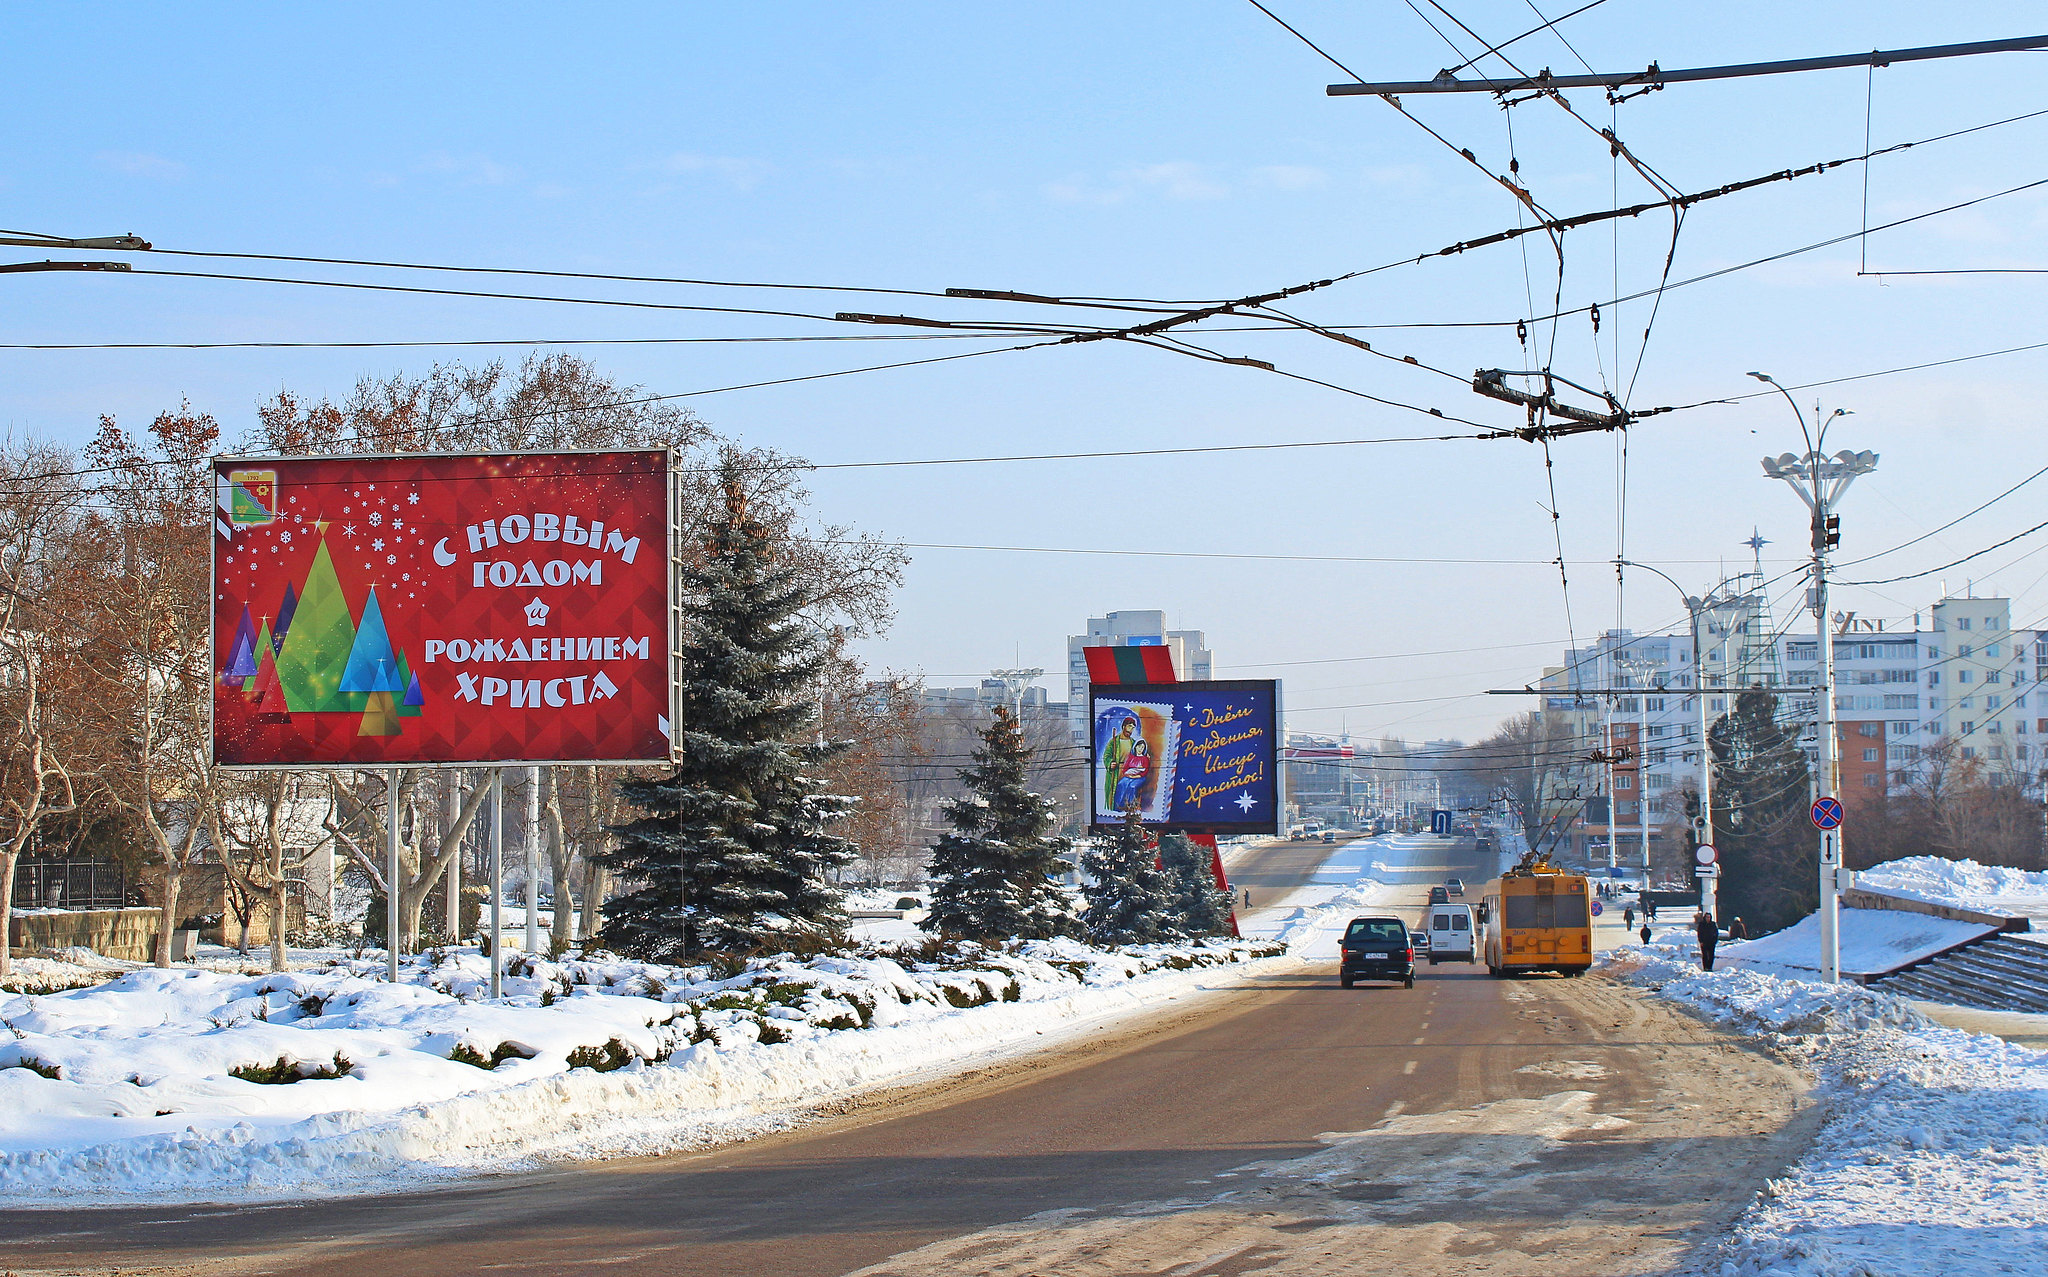 Transnistria: No Longer an Illegal Trade Hub?